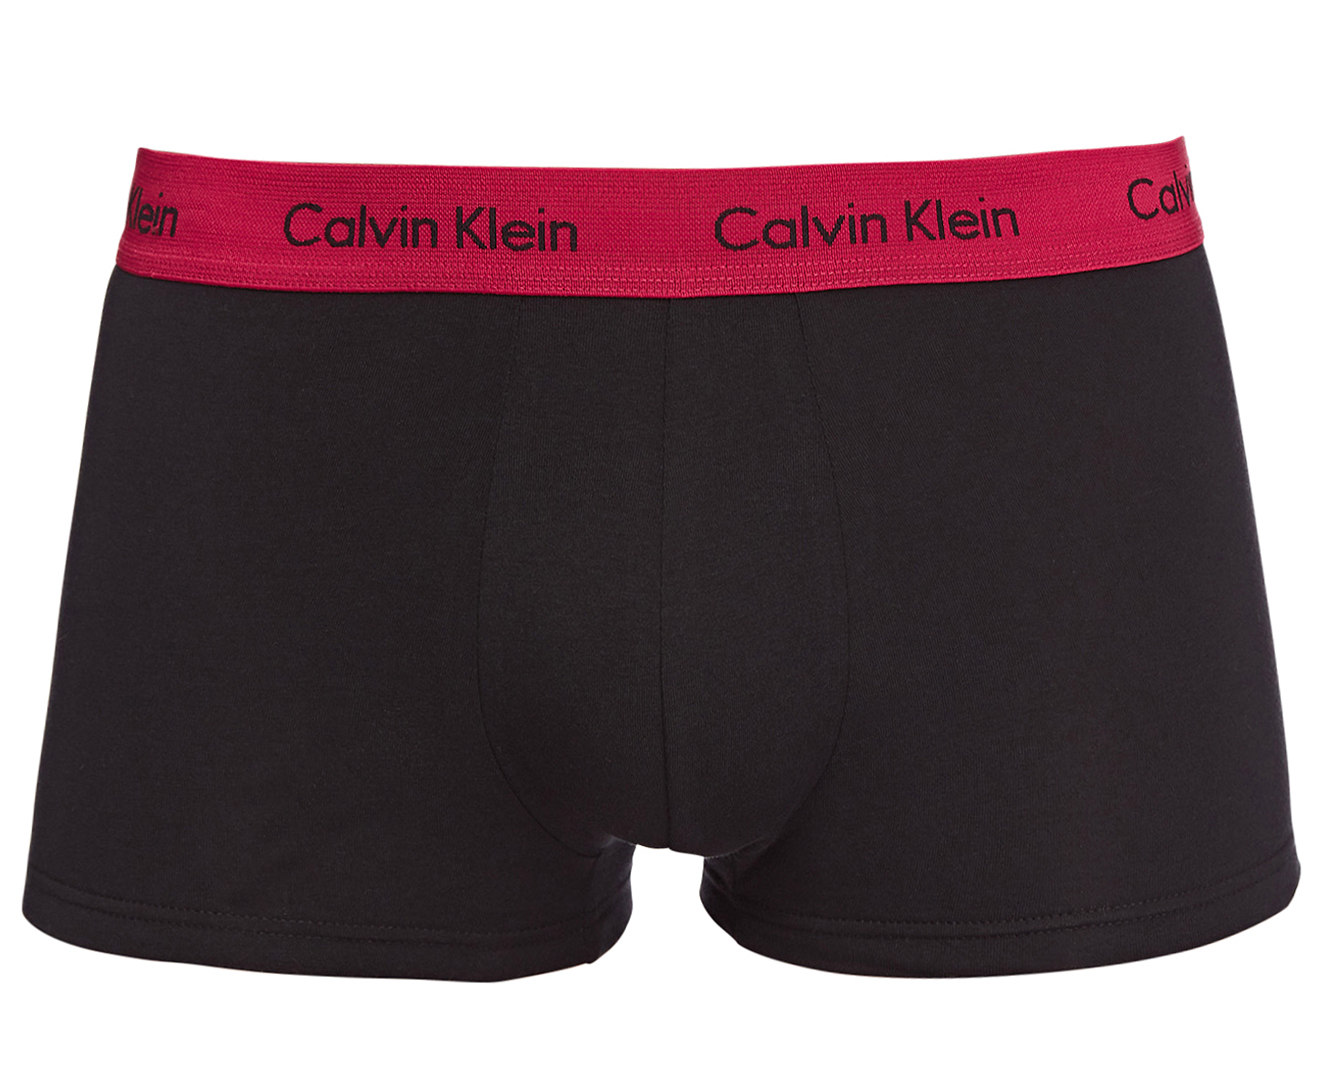 Calvin Klein Men's Classic Fit Cotton Stretch Low Rise Trunks 3-Pack ...